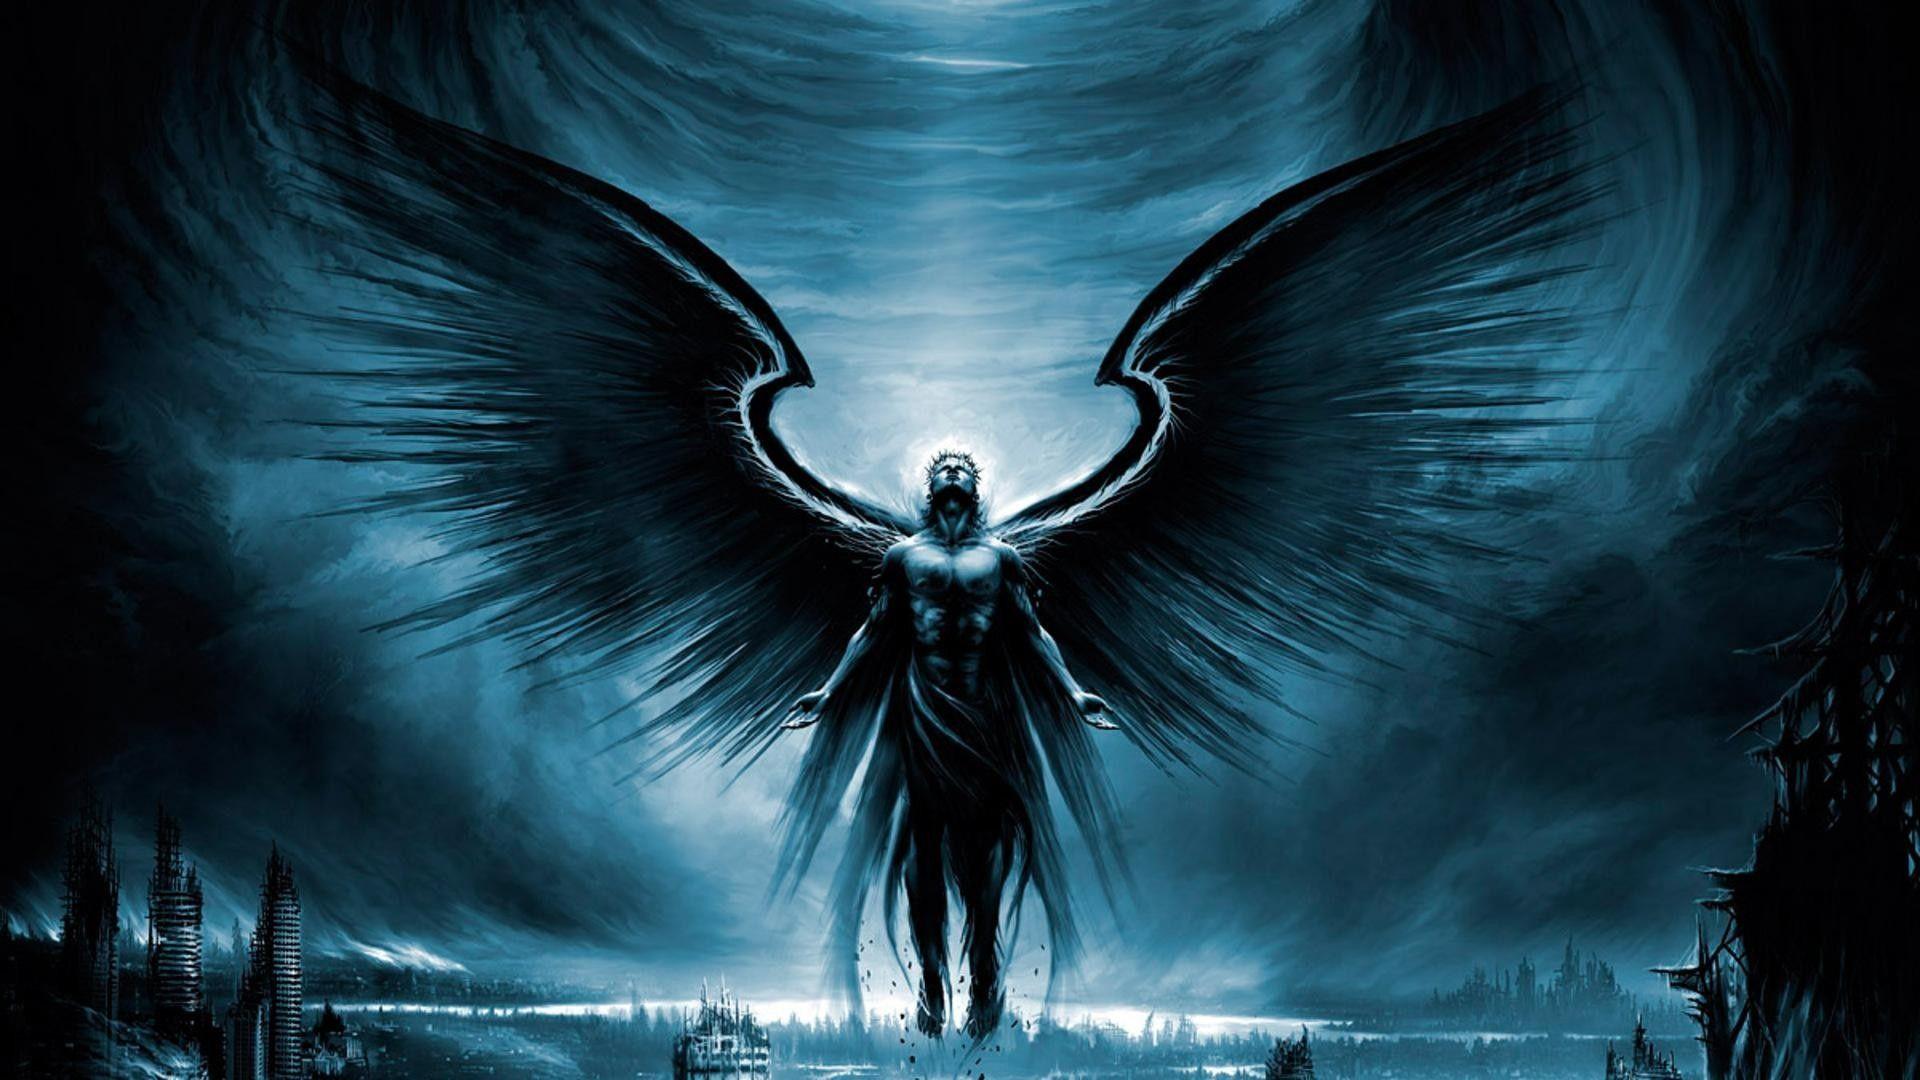 The Dark Angel HD Wallpaper HD 1080p. Dark Angel